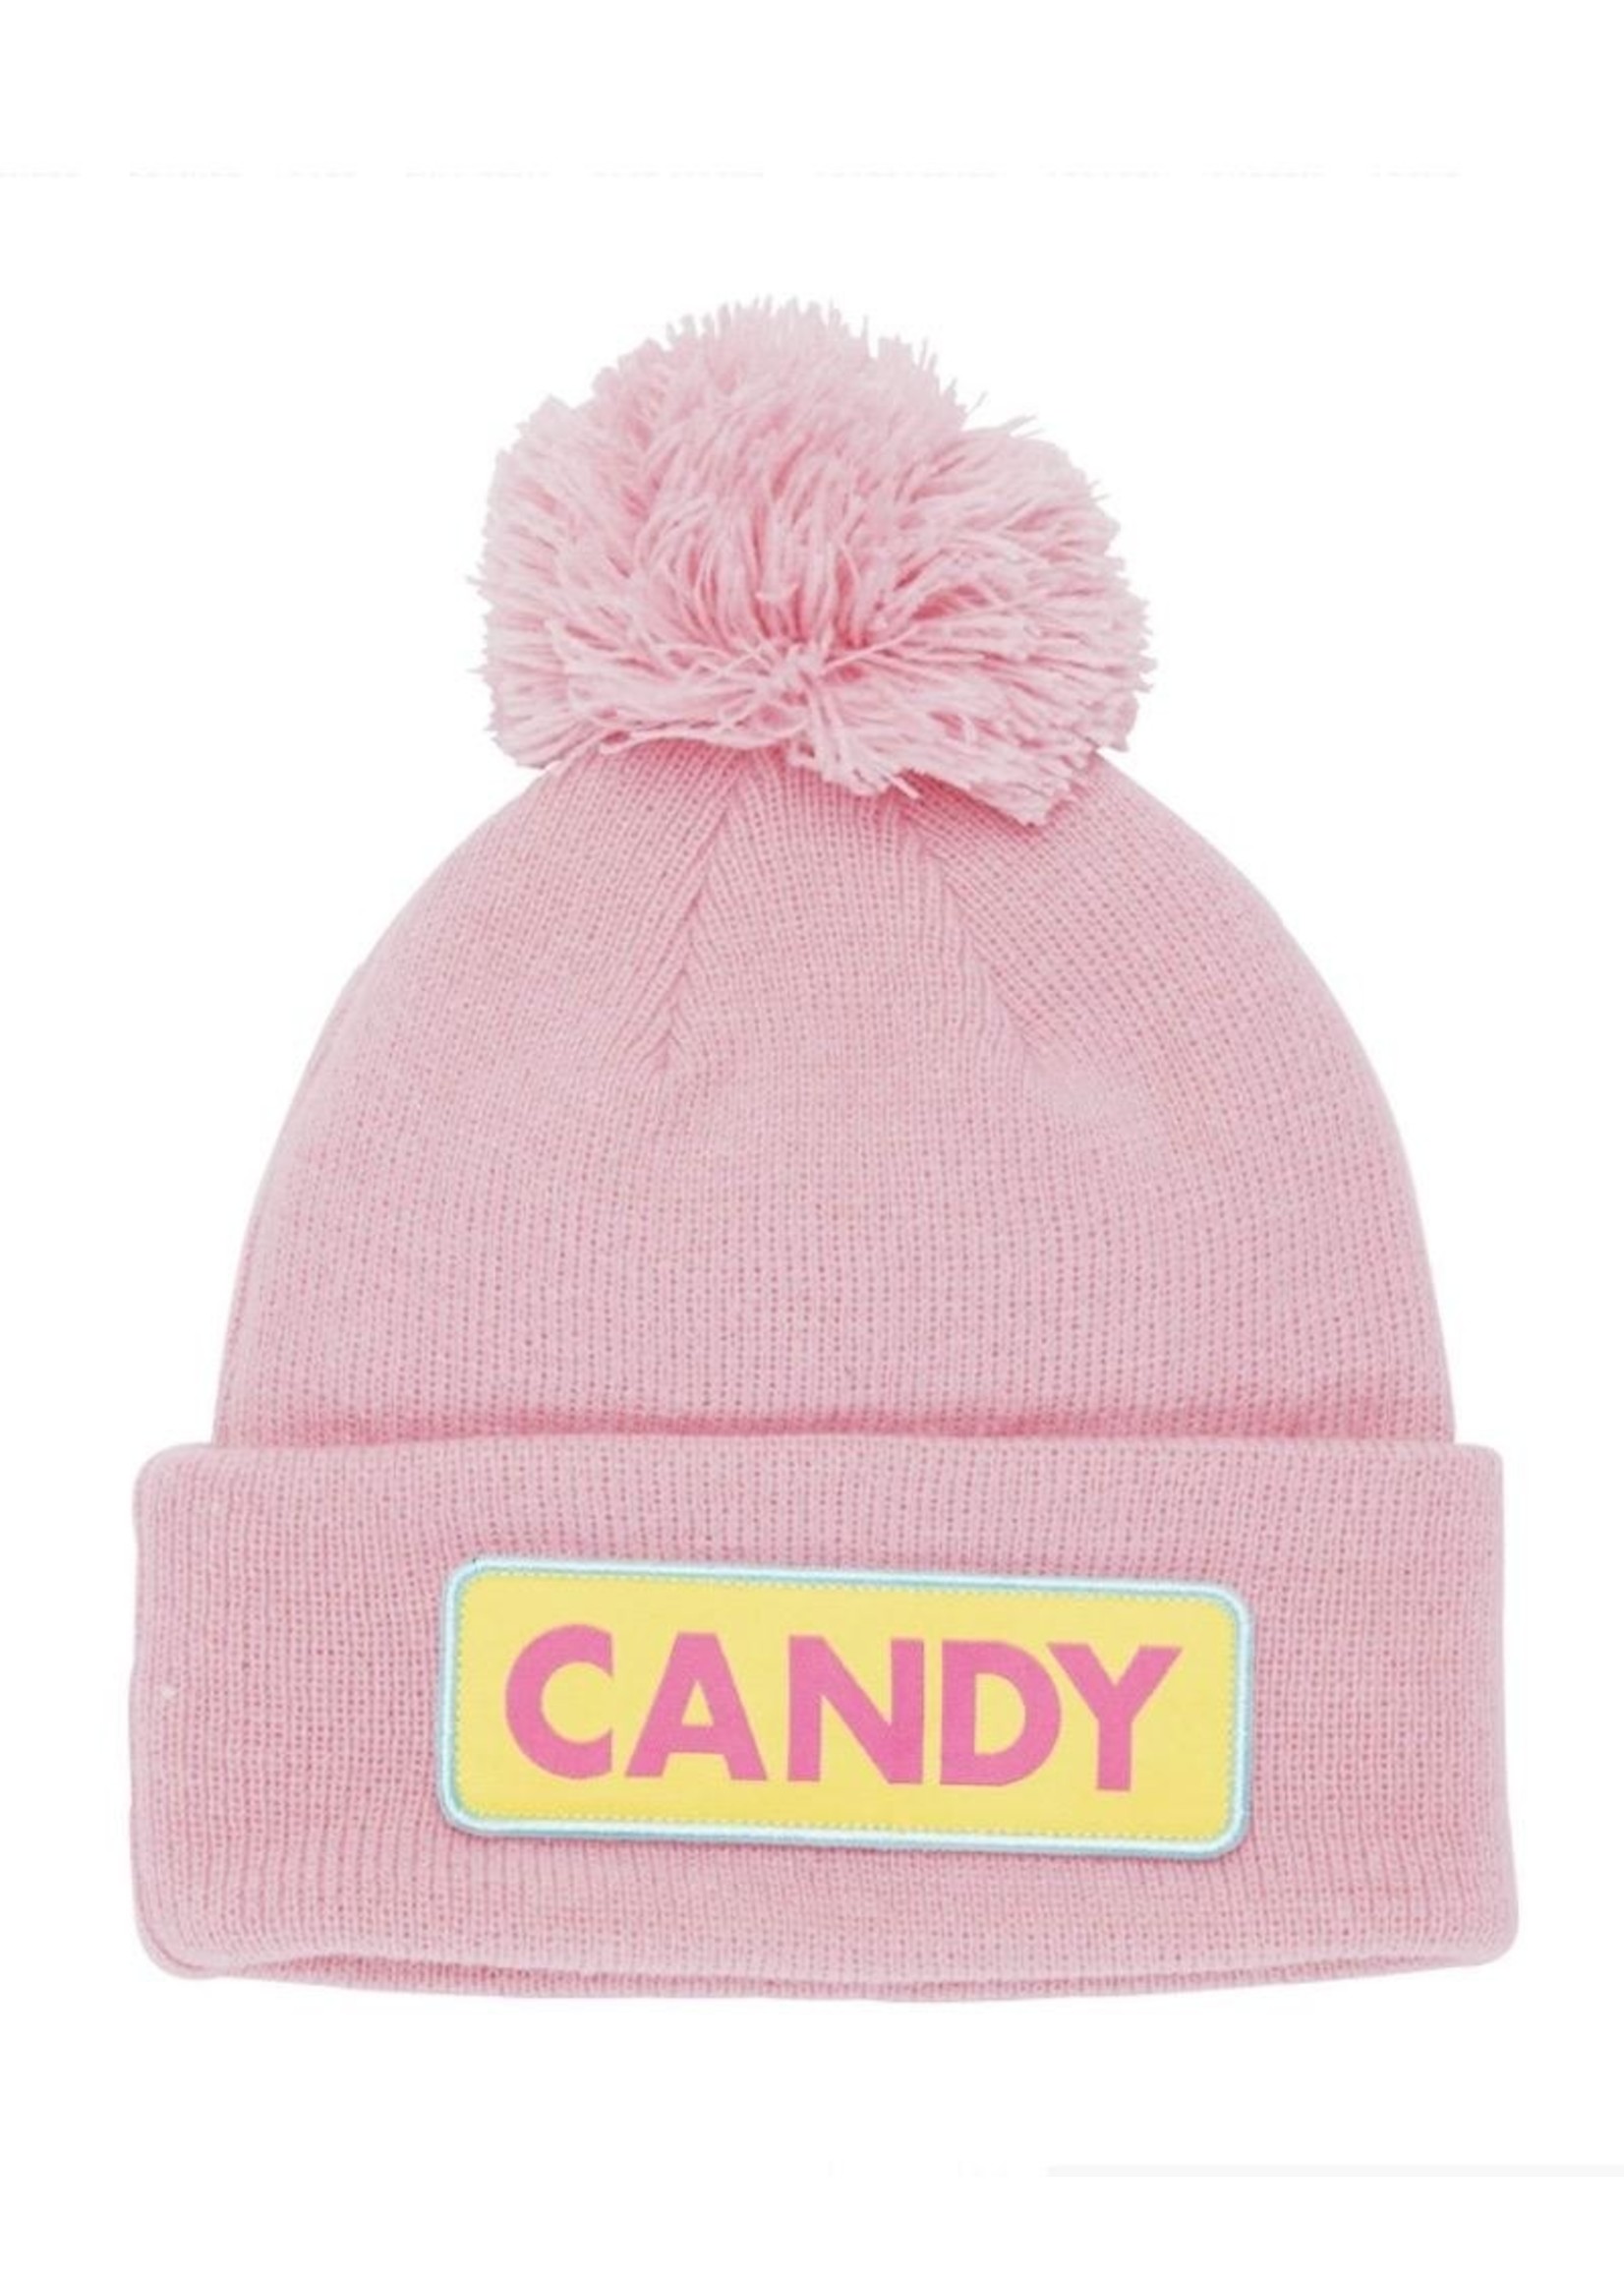 Coal Coal Headwear, The Vice Kids “Candy” Pom Beanie in Pink